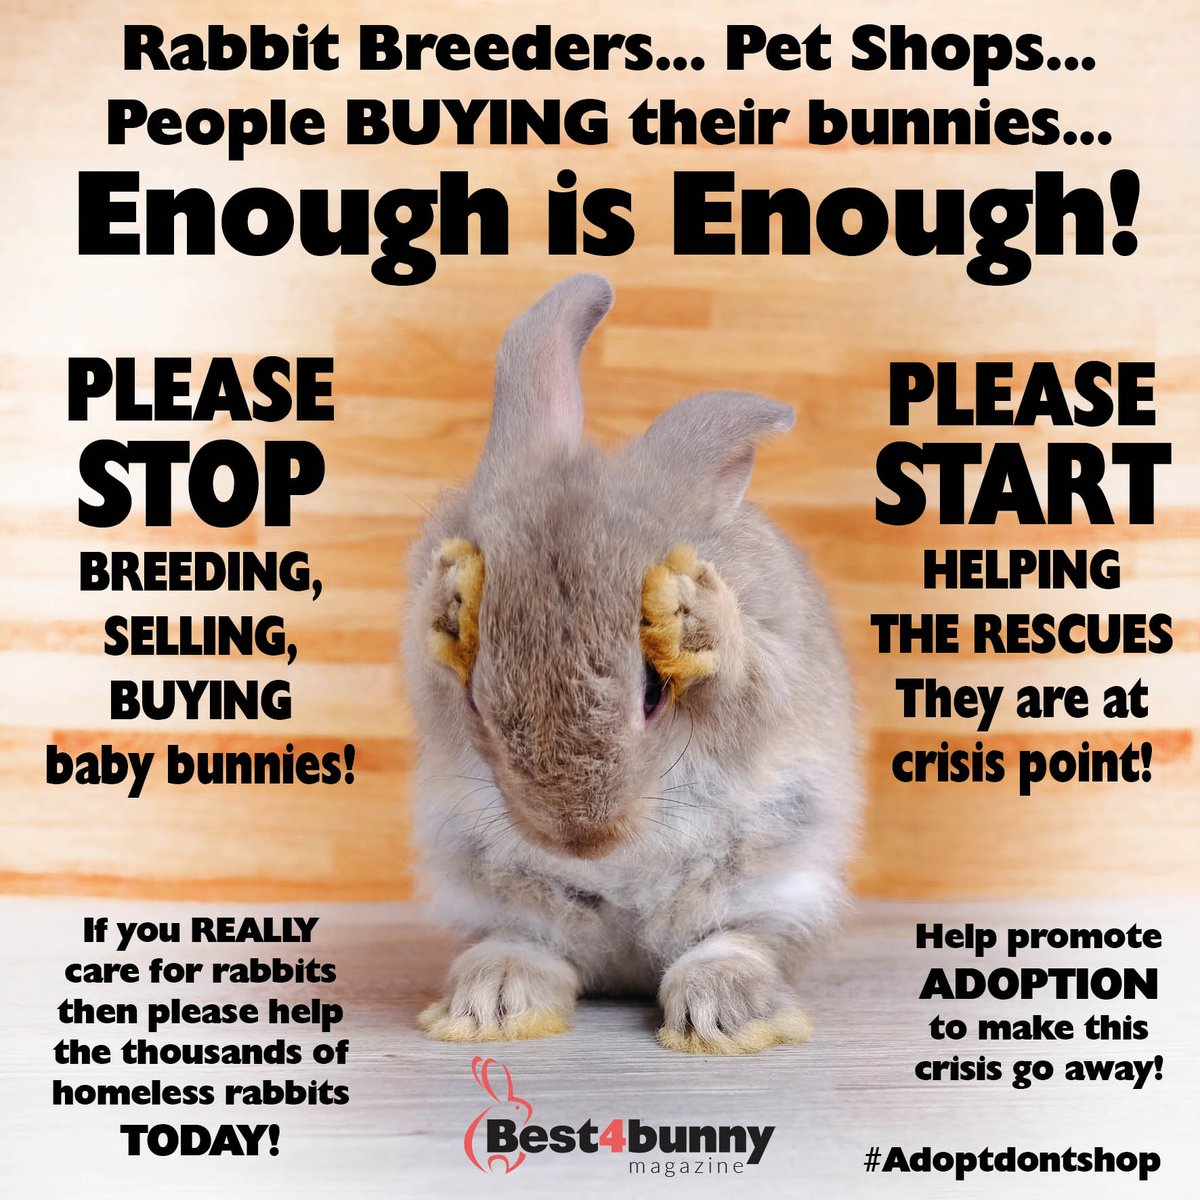 Please help the rescues and help this crisis go away!
#adoptdontshop #helpingothers #rabbitrescue #rabbitwelfare #bunnylove #adoptarescue